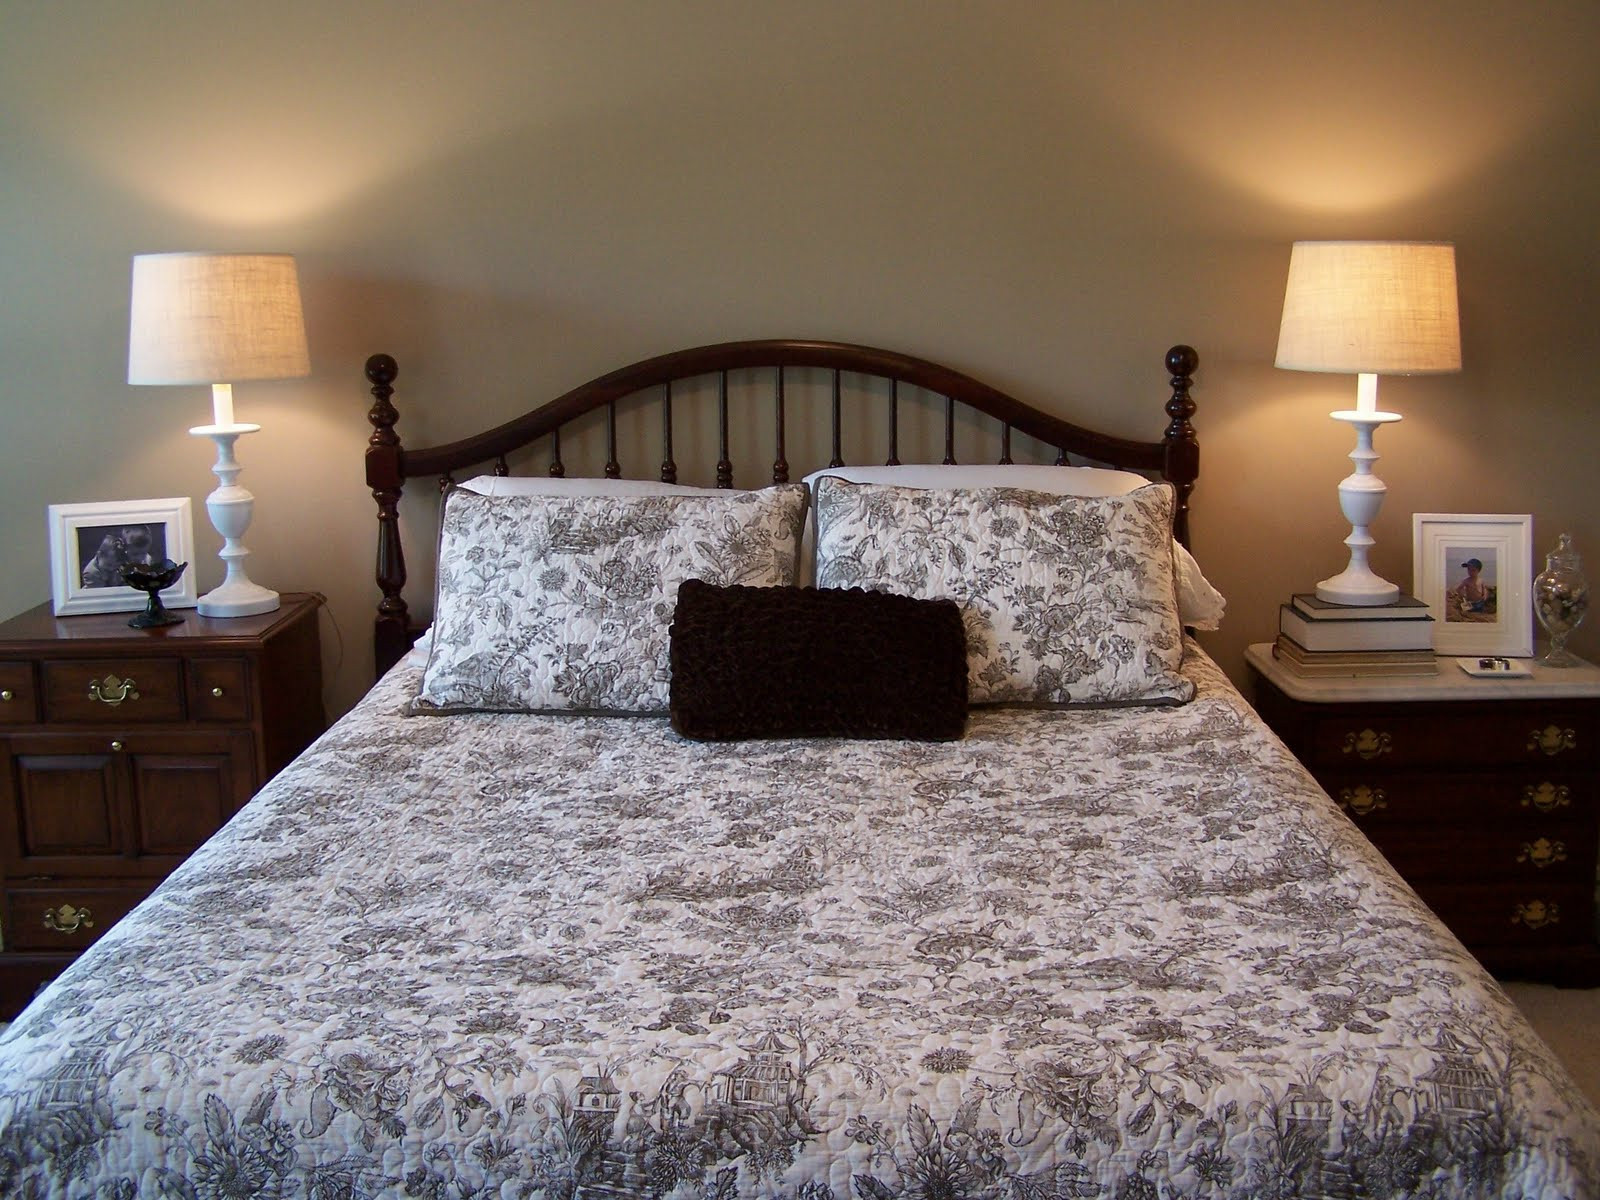 Master Bedroom Lamps
 Homemakin and Decoratin Master bedroom dreaming